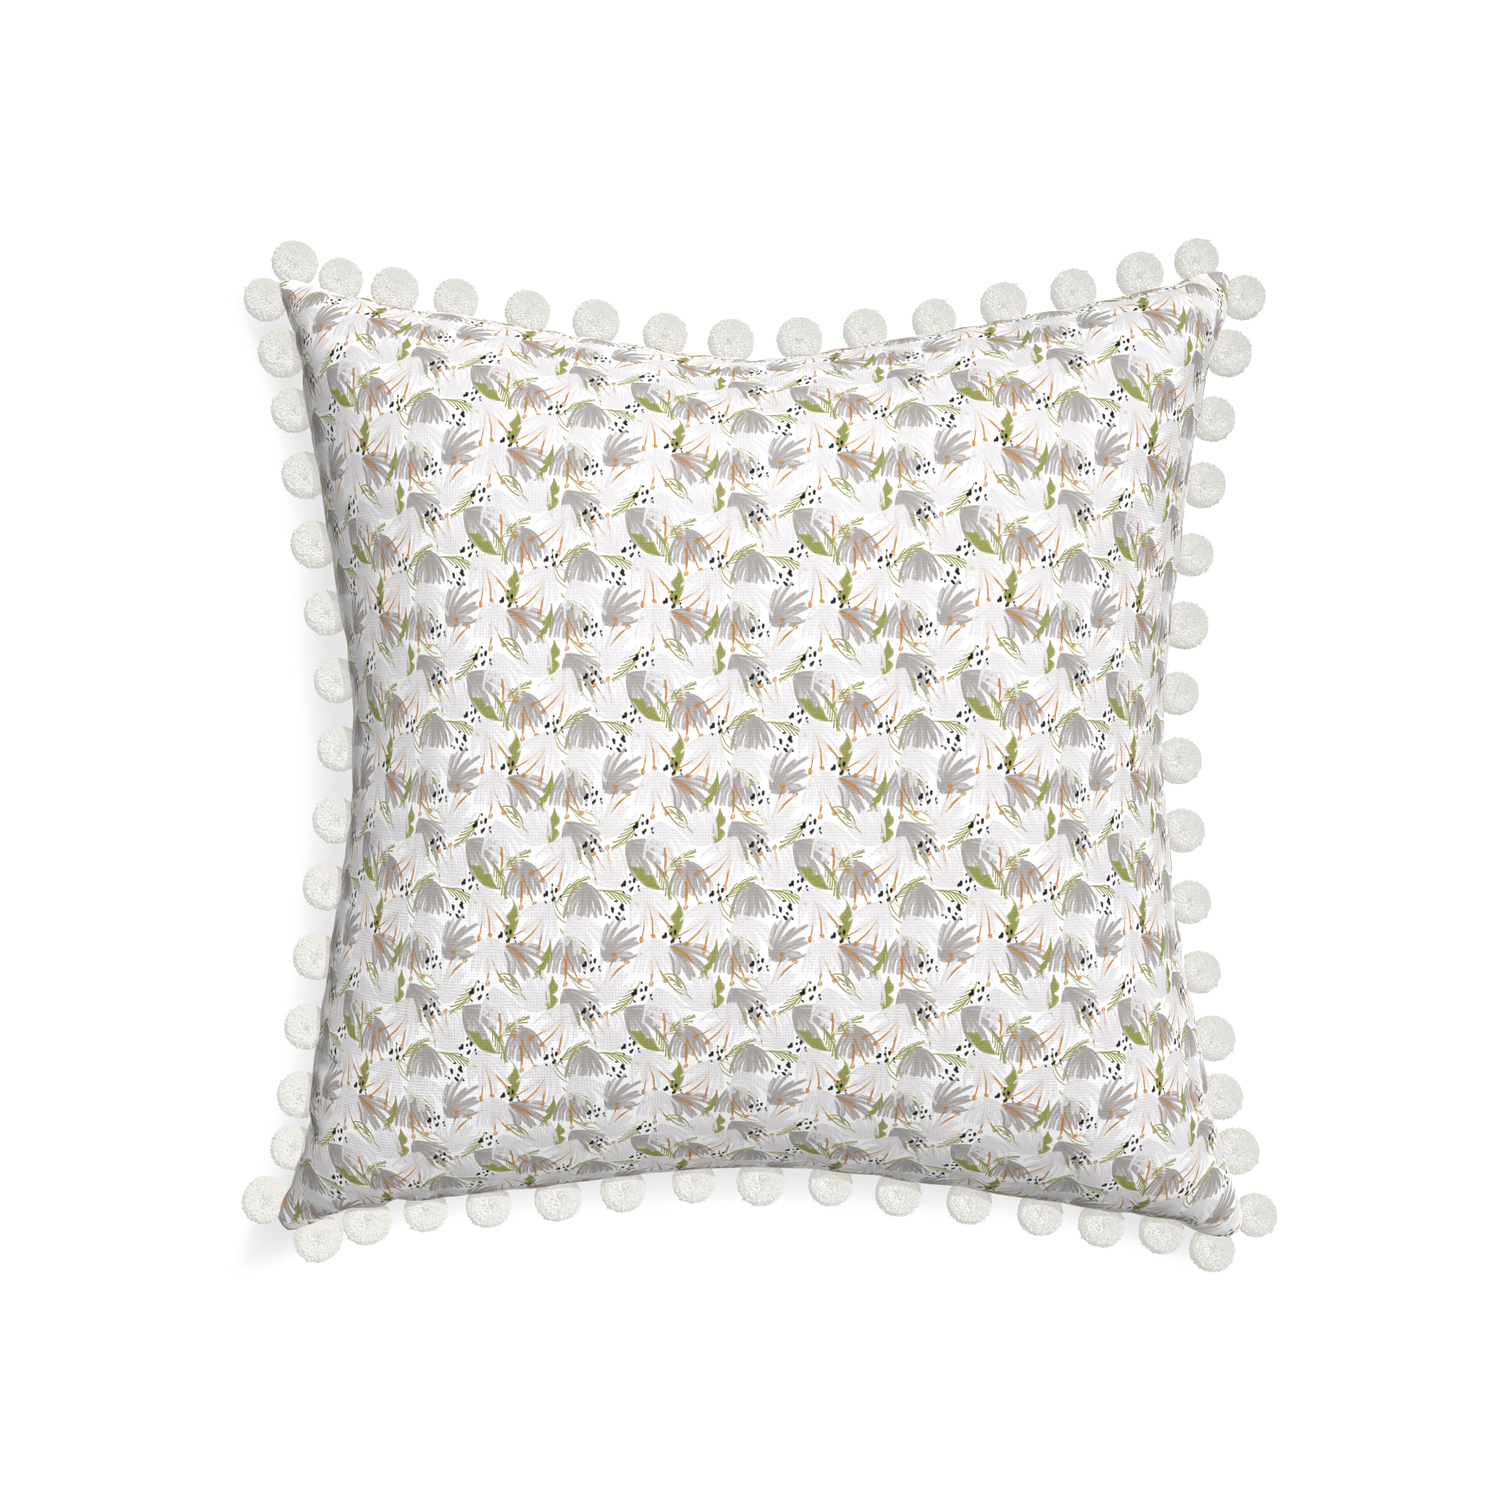 22-square eden grey custom pillow with snow pom pom on white background